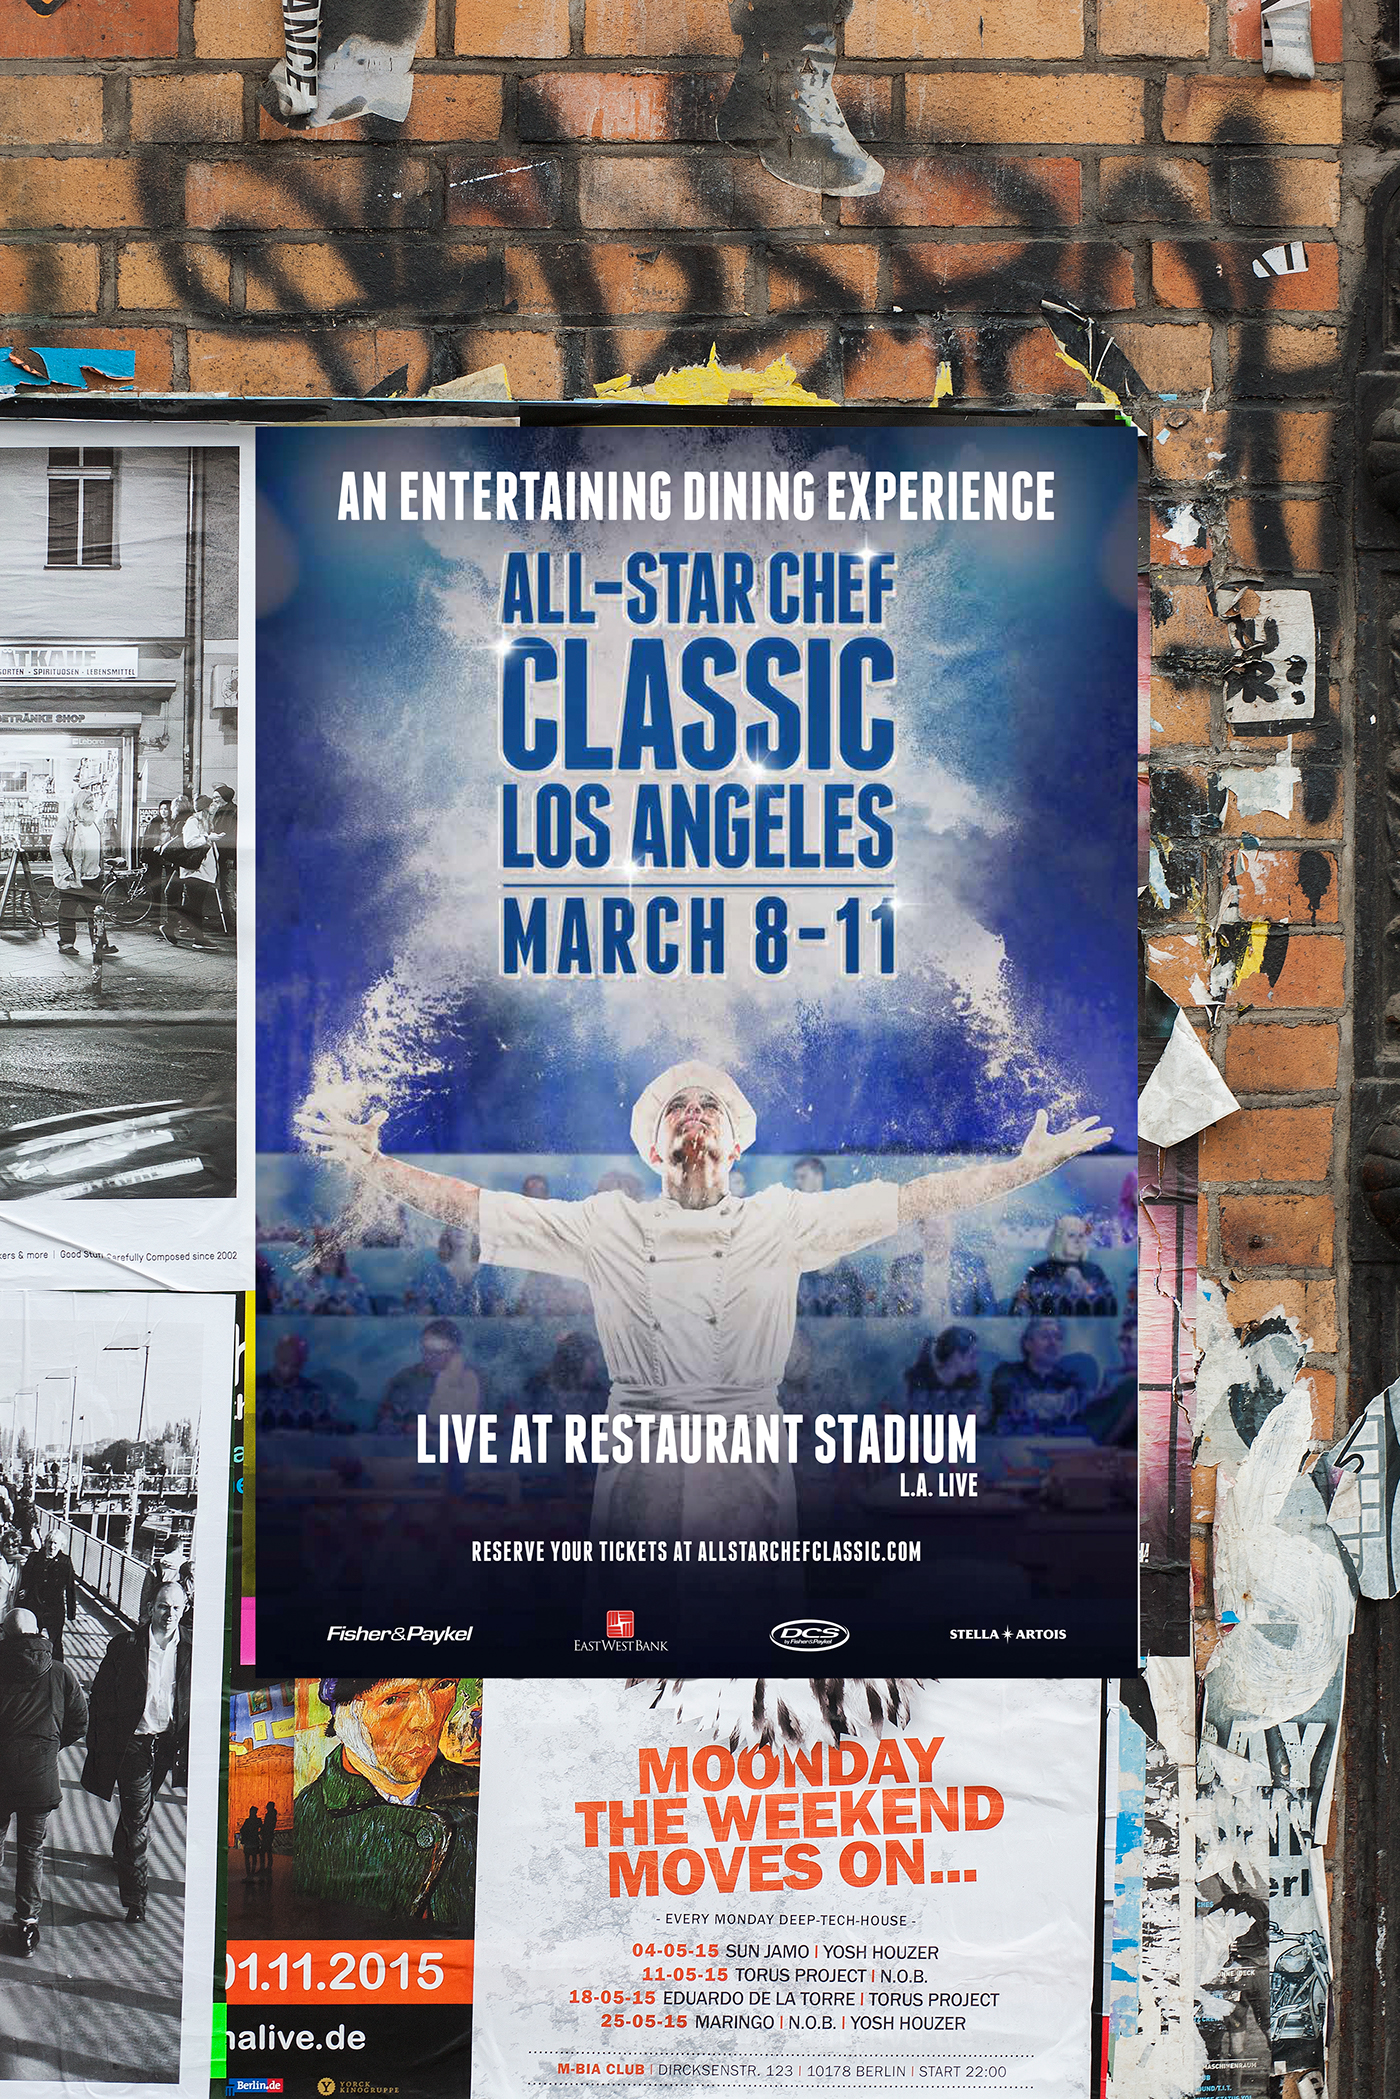 All-Star Chef Classic L.A. Live ascc Chefs chef Restaurant Stadium Los Angeles